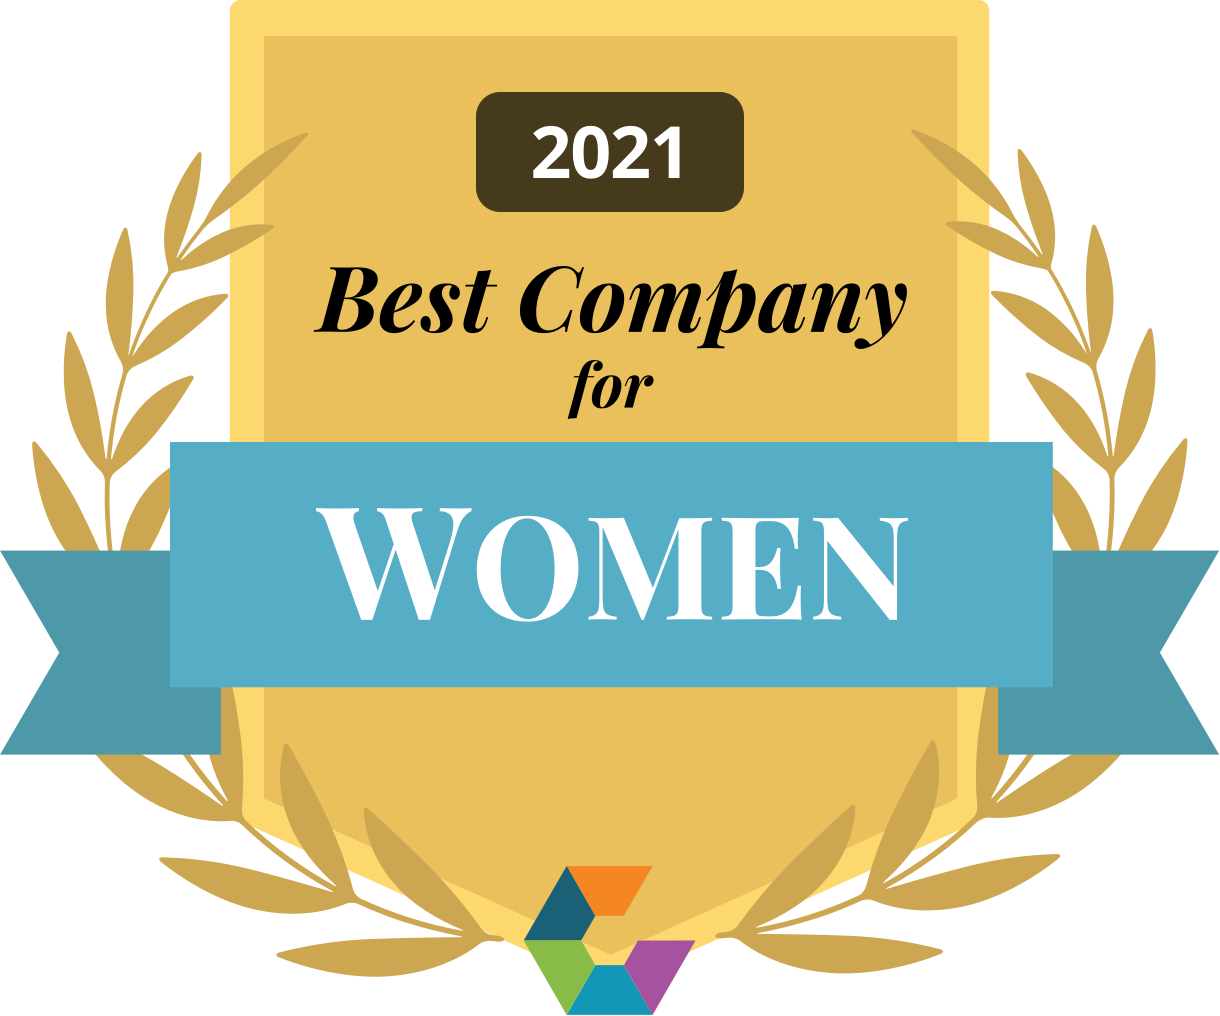 Best Company for Women 2021